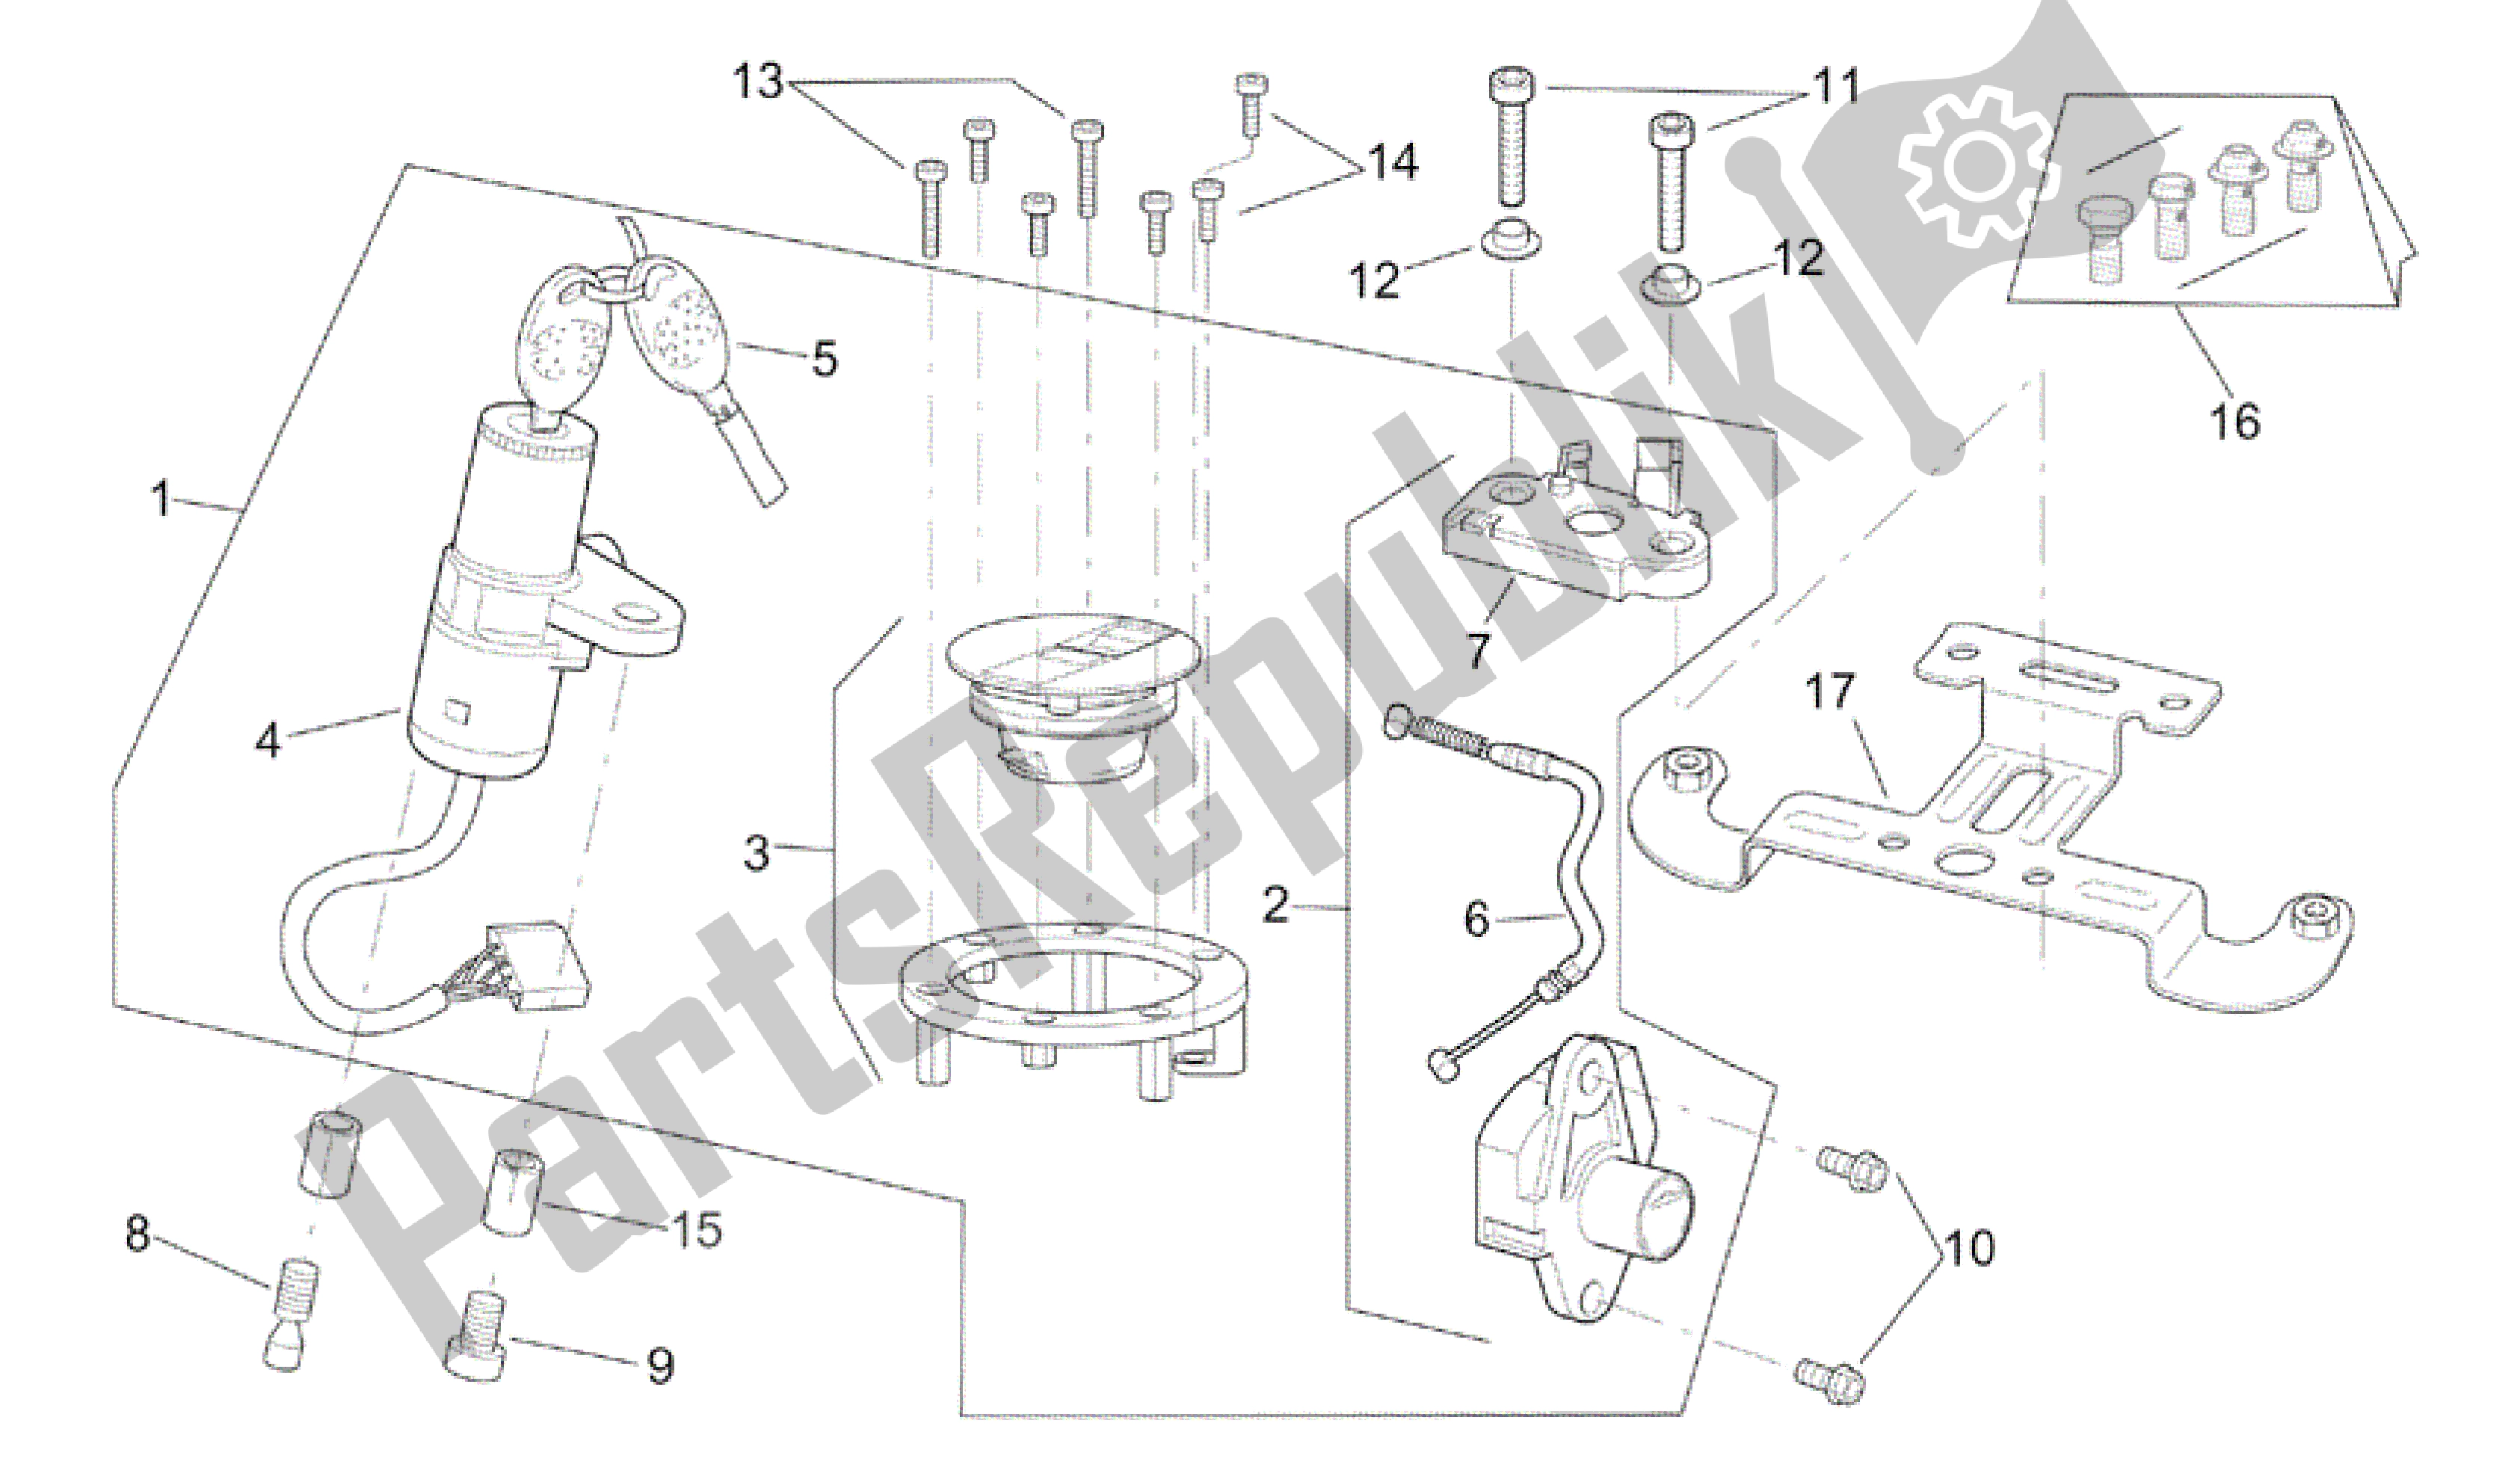 All parts for the Lock Hardware Kit of the Aprilia RSV Tuono R 3952 1000 2002 - 2003